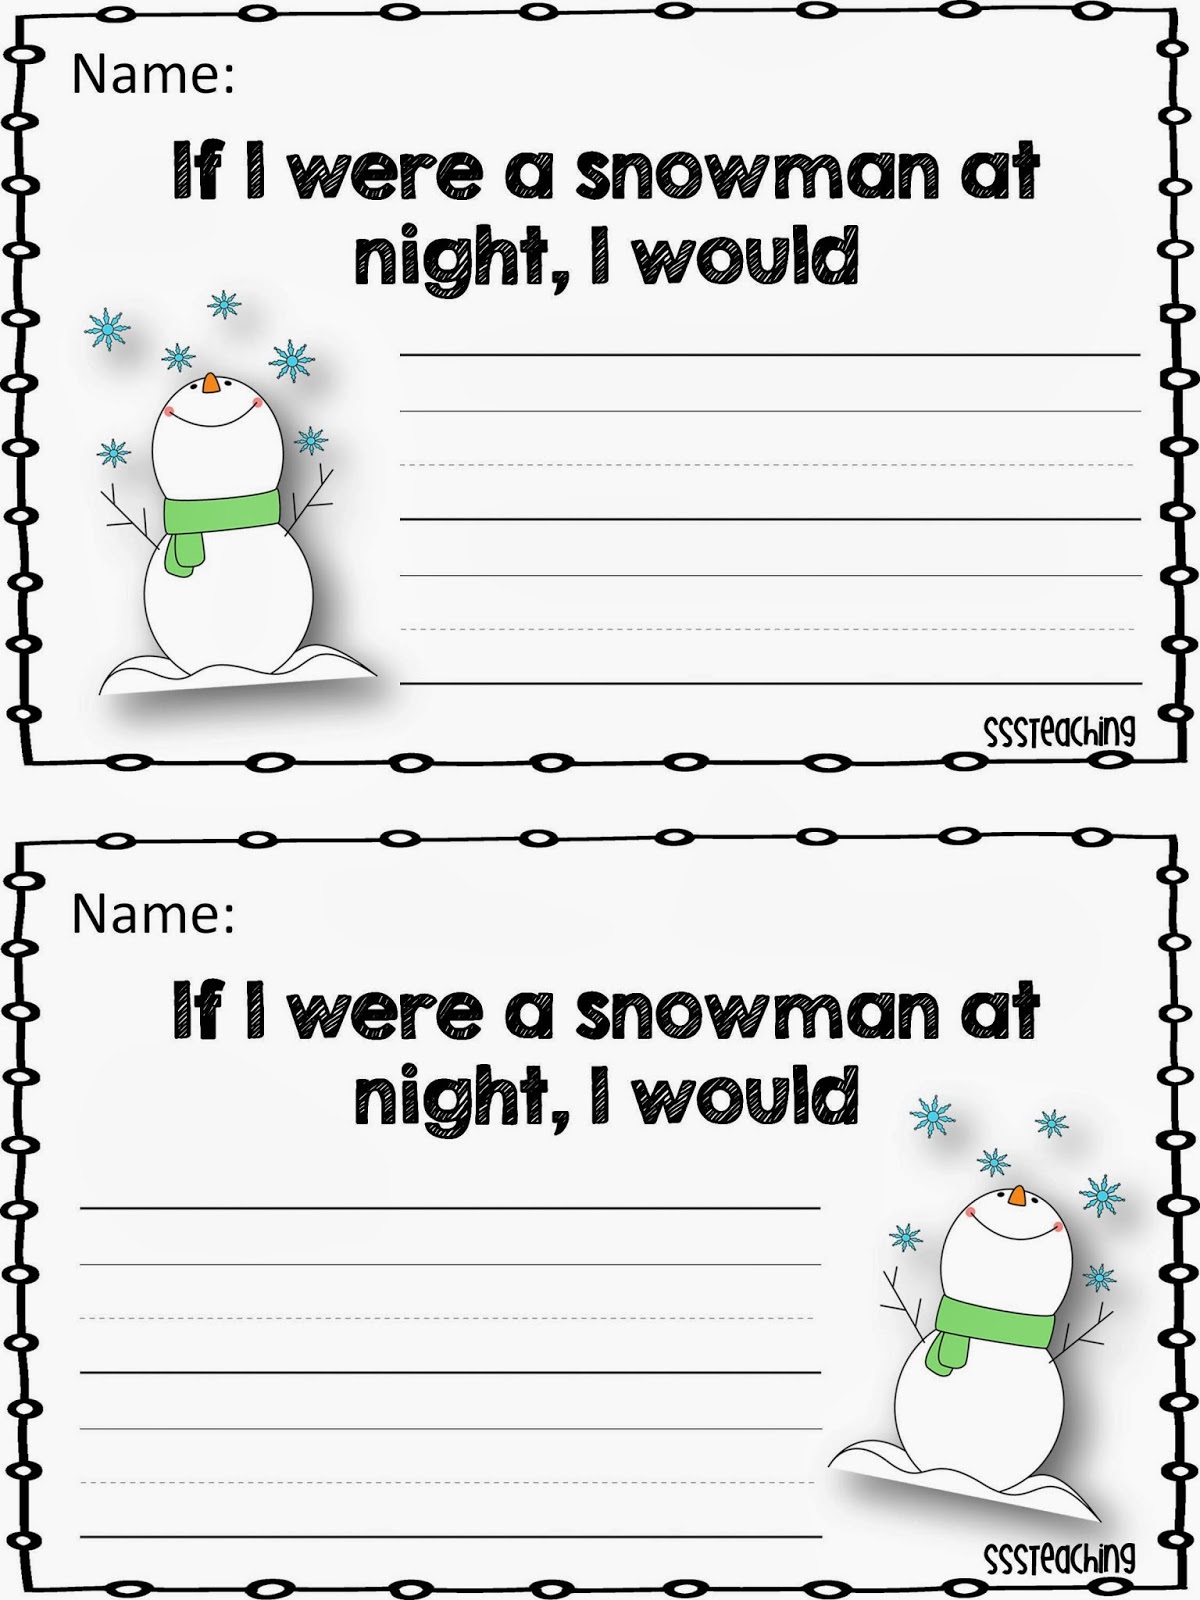 Snowmen at Night and Ryan Gosling :)